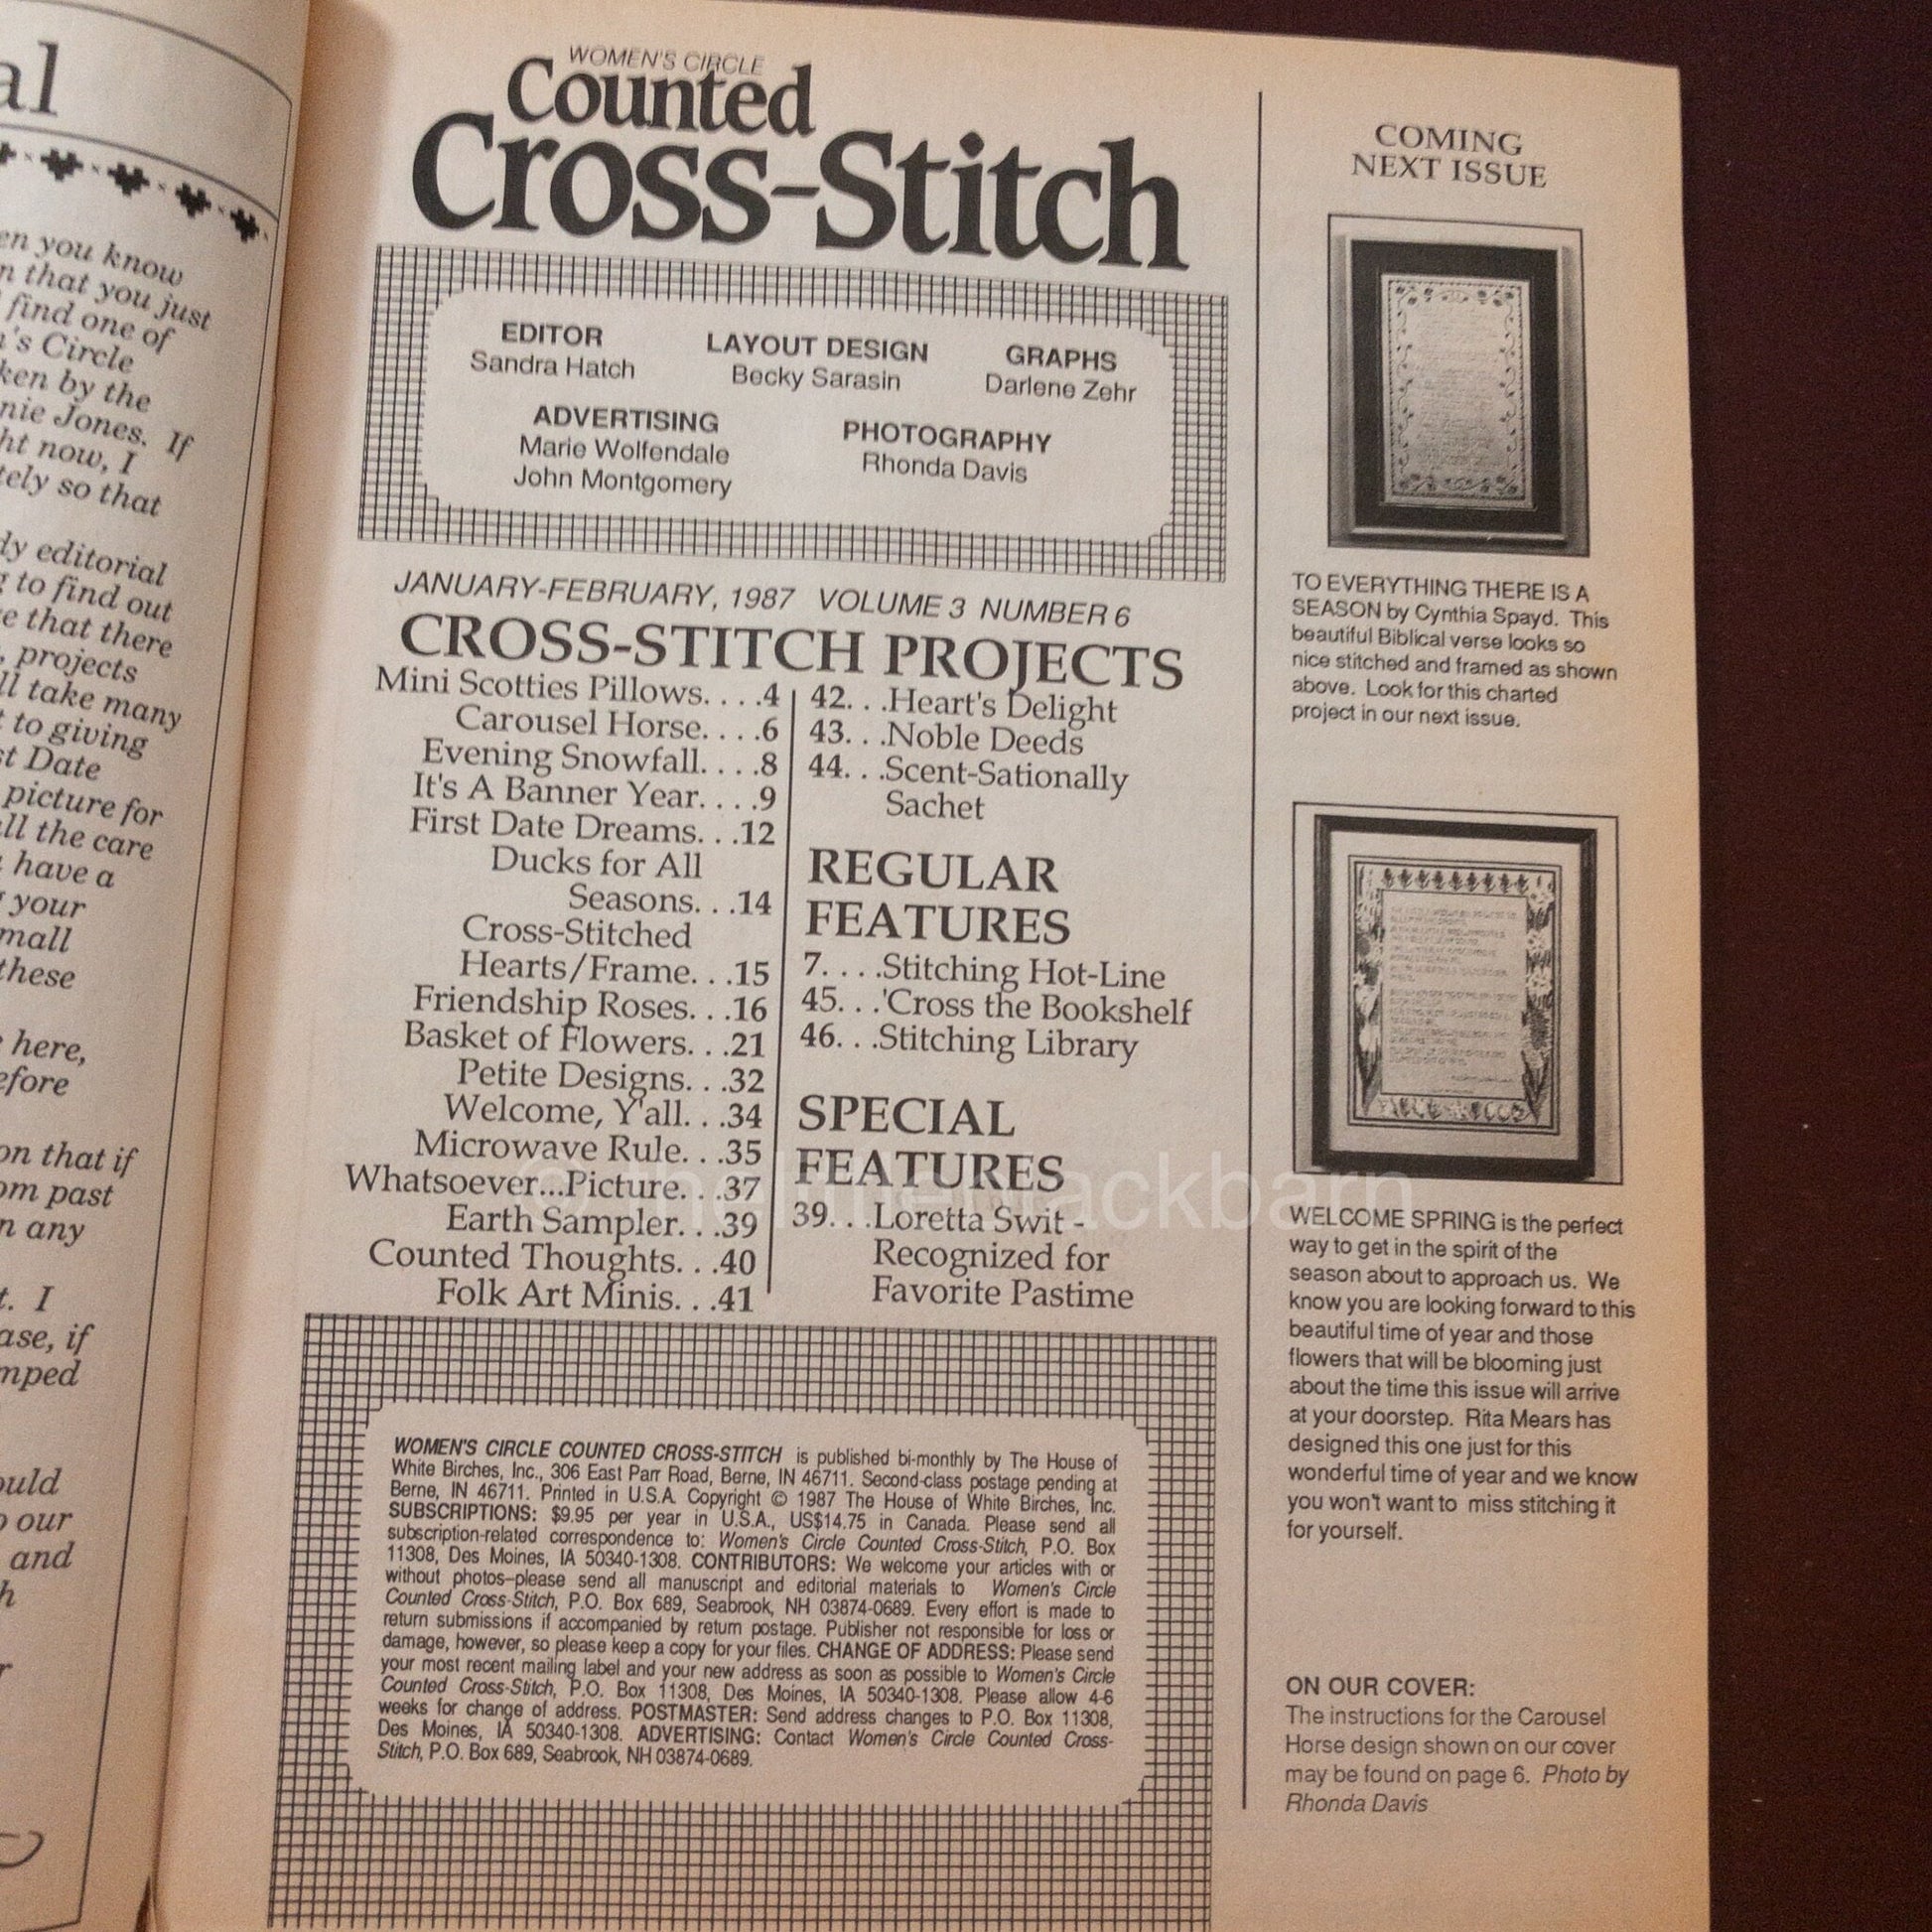 Women's Circle Counted Cross Stitch & Candlewicking 1984-87*